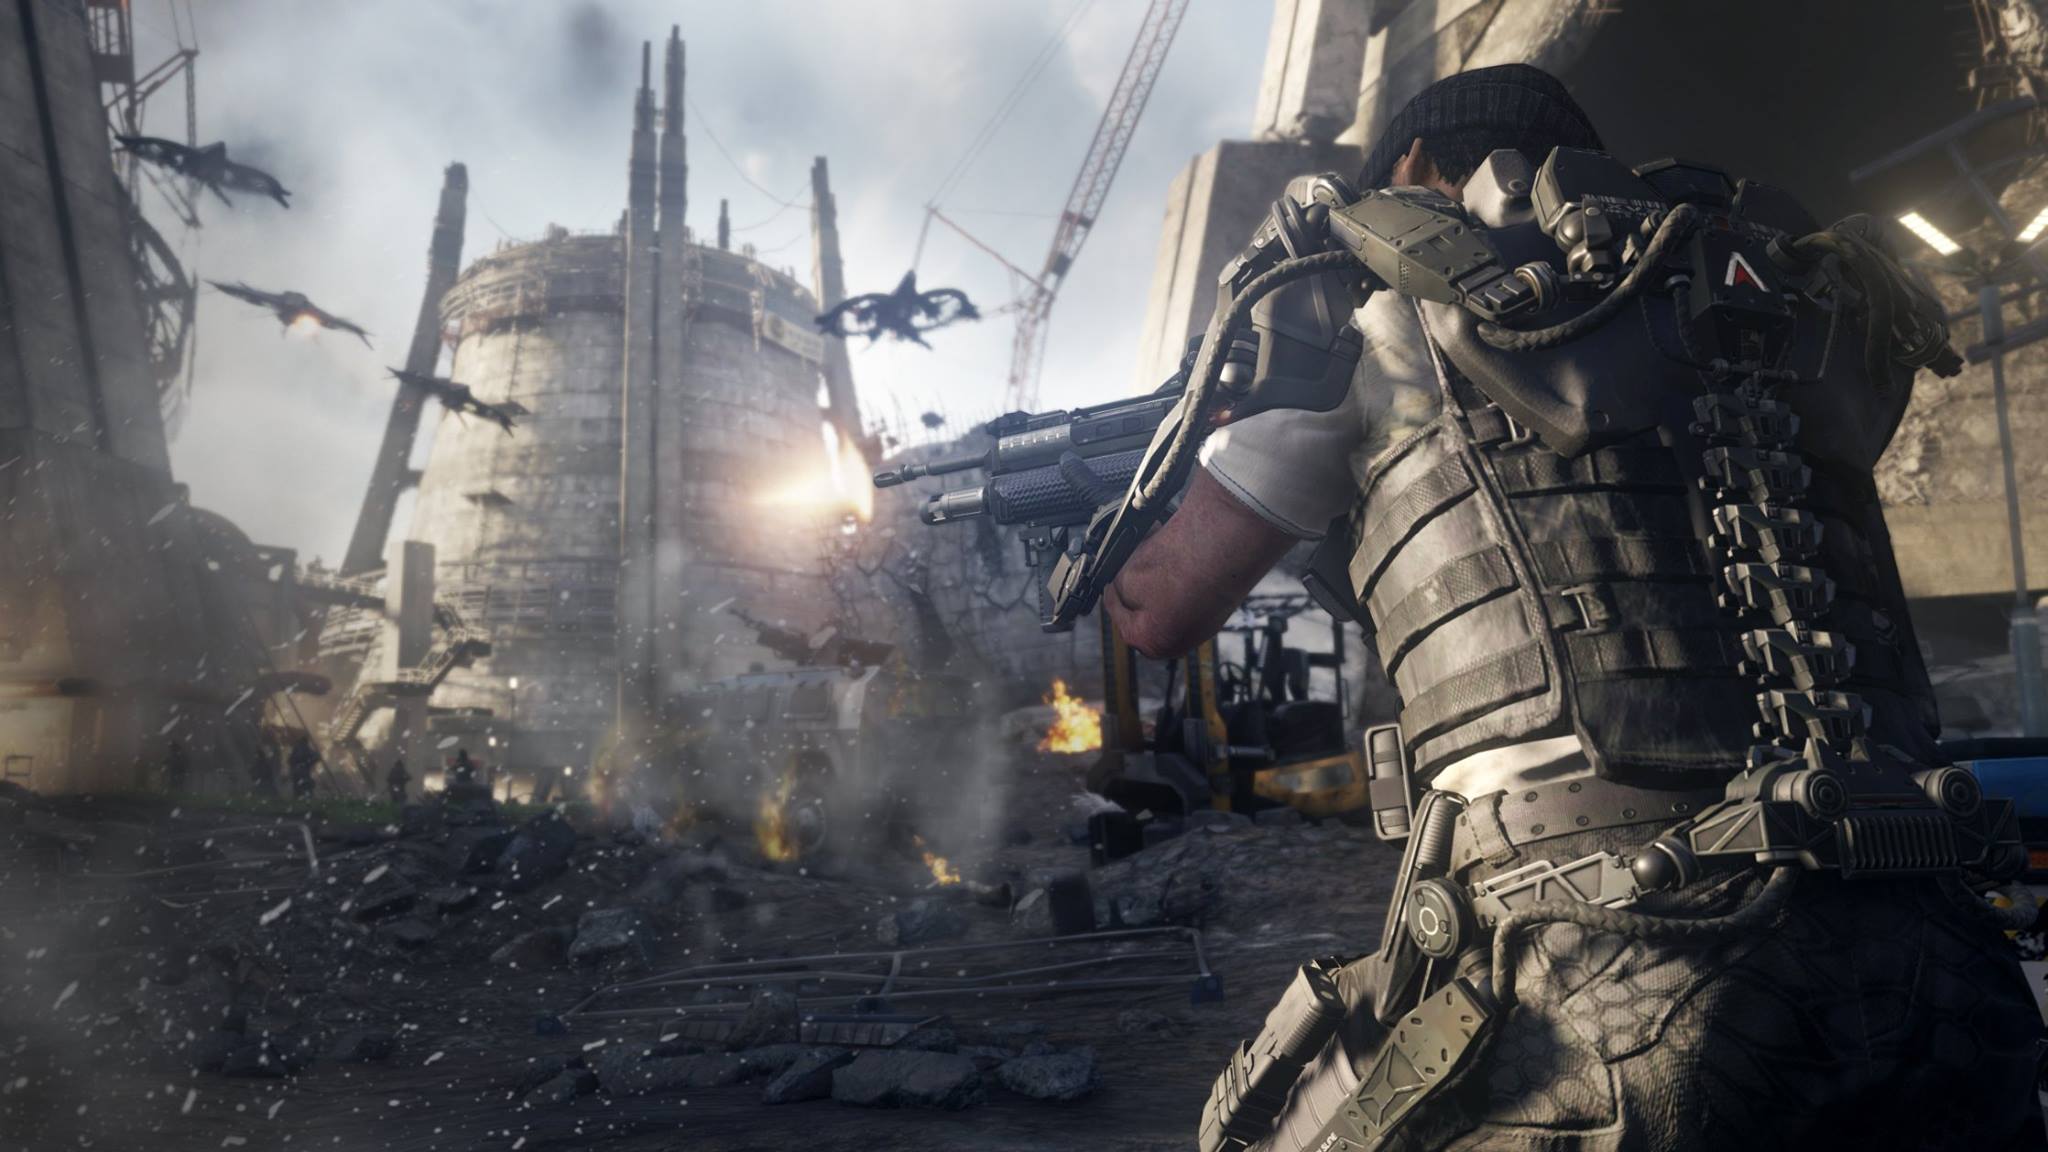 Call of Duty: Advanced Warfare gets three new screenshots - What do you think?